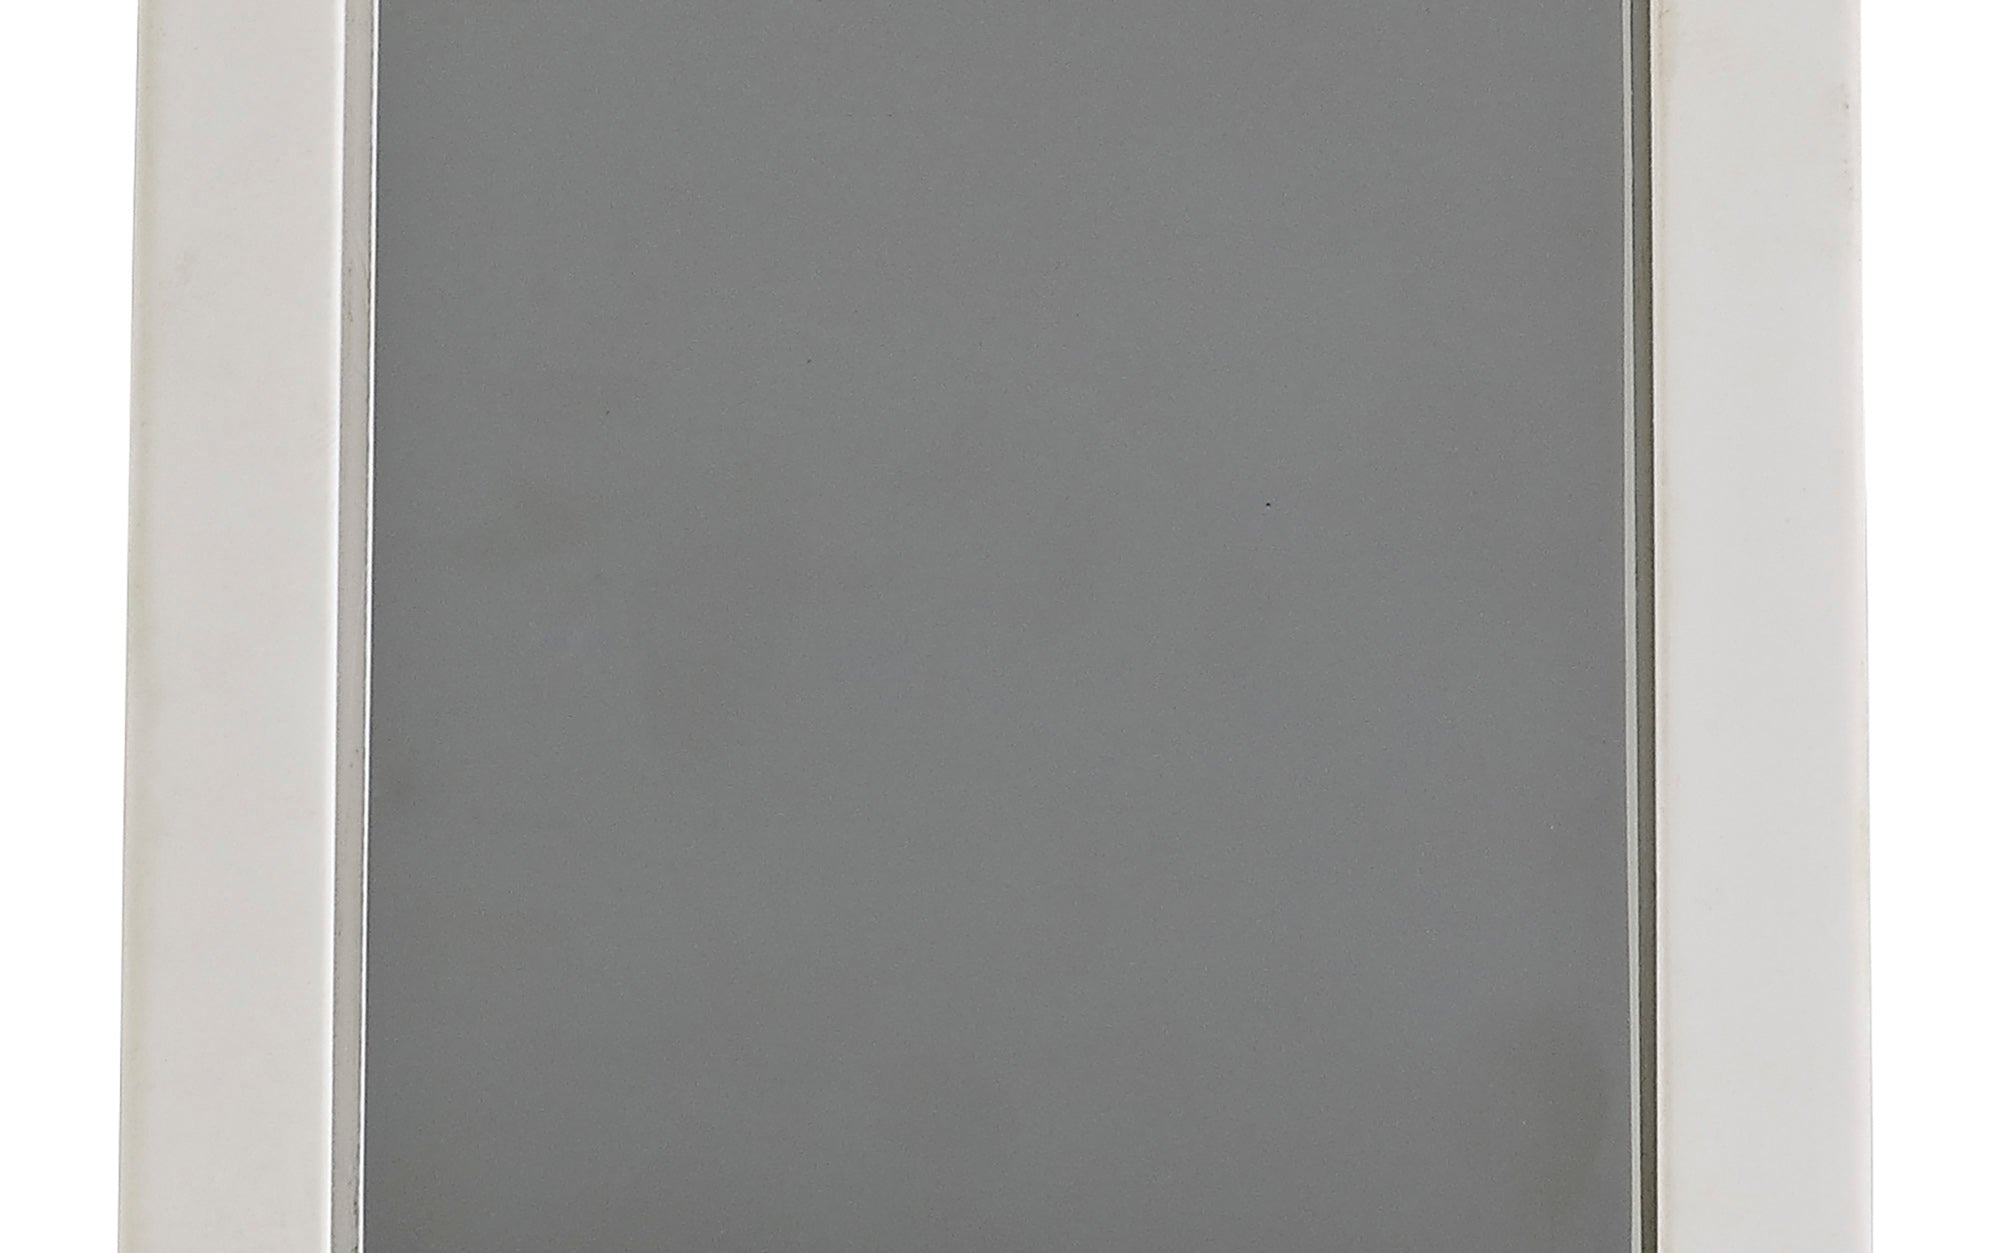 Erik 1 Light Square Ceiling GU10, White Paintable Gypsum With Polished Chrome Cover LOK101103